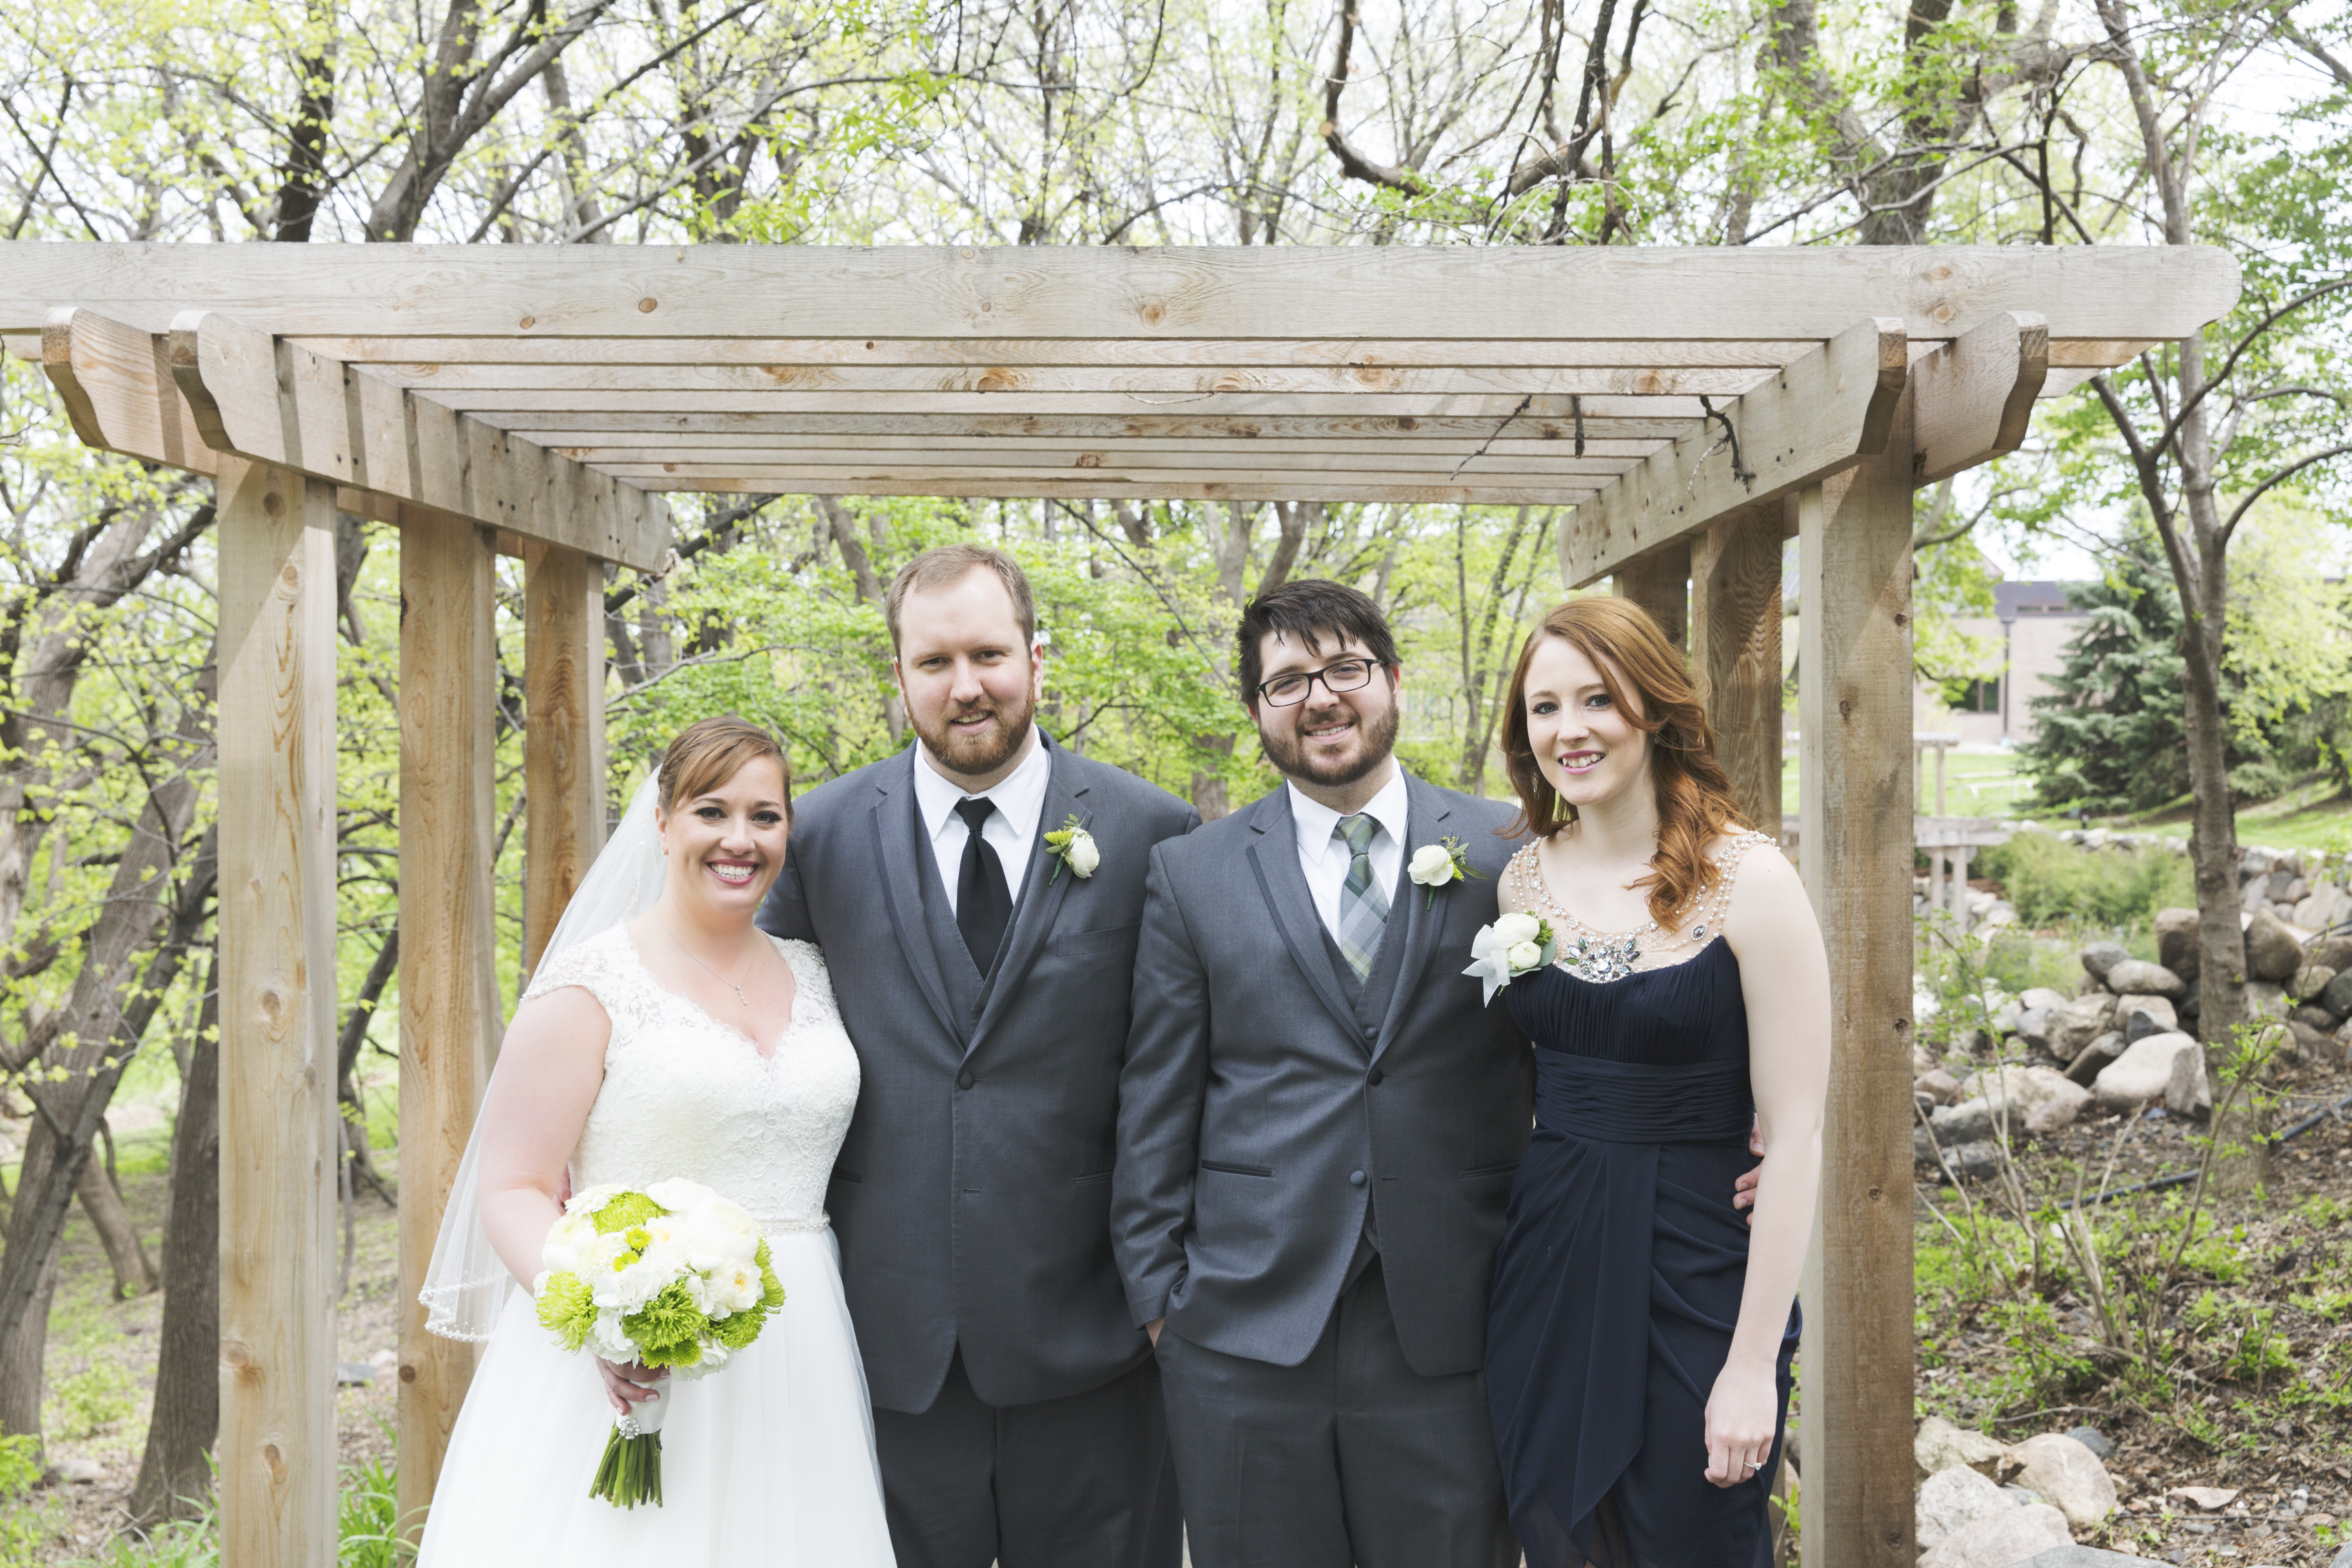 A photo from Wyatt Andersen and Caitlin Gadel's wedding.